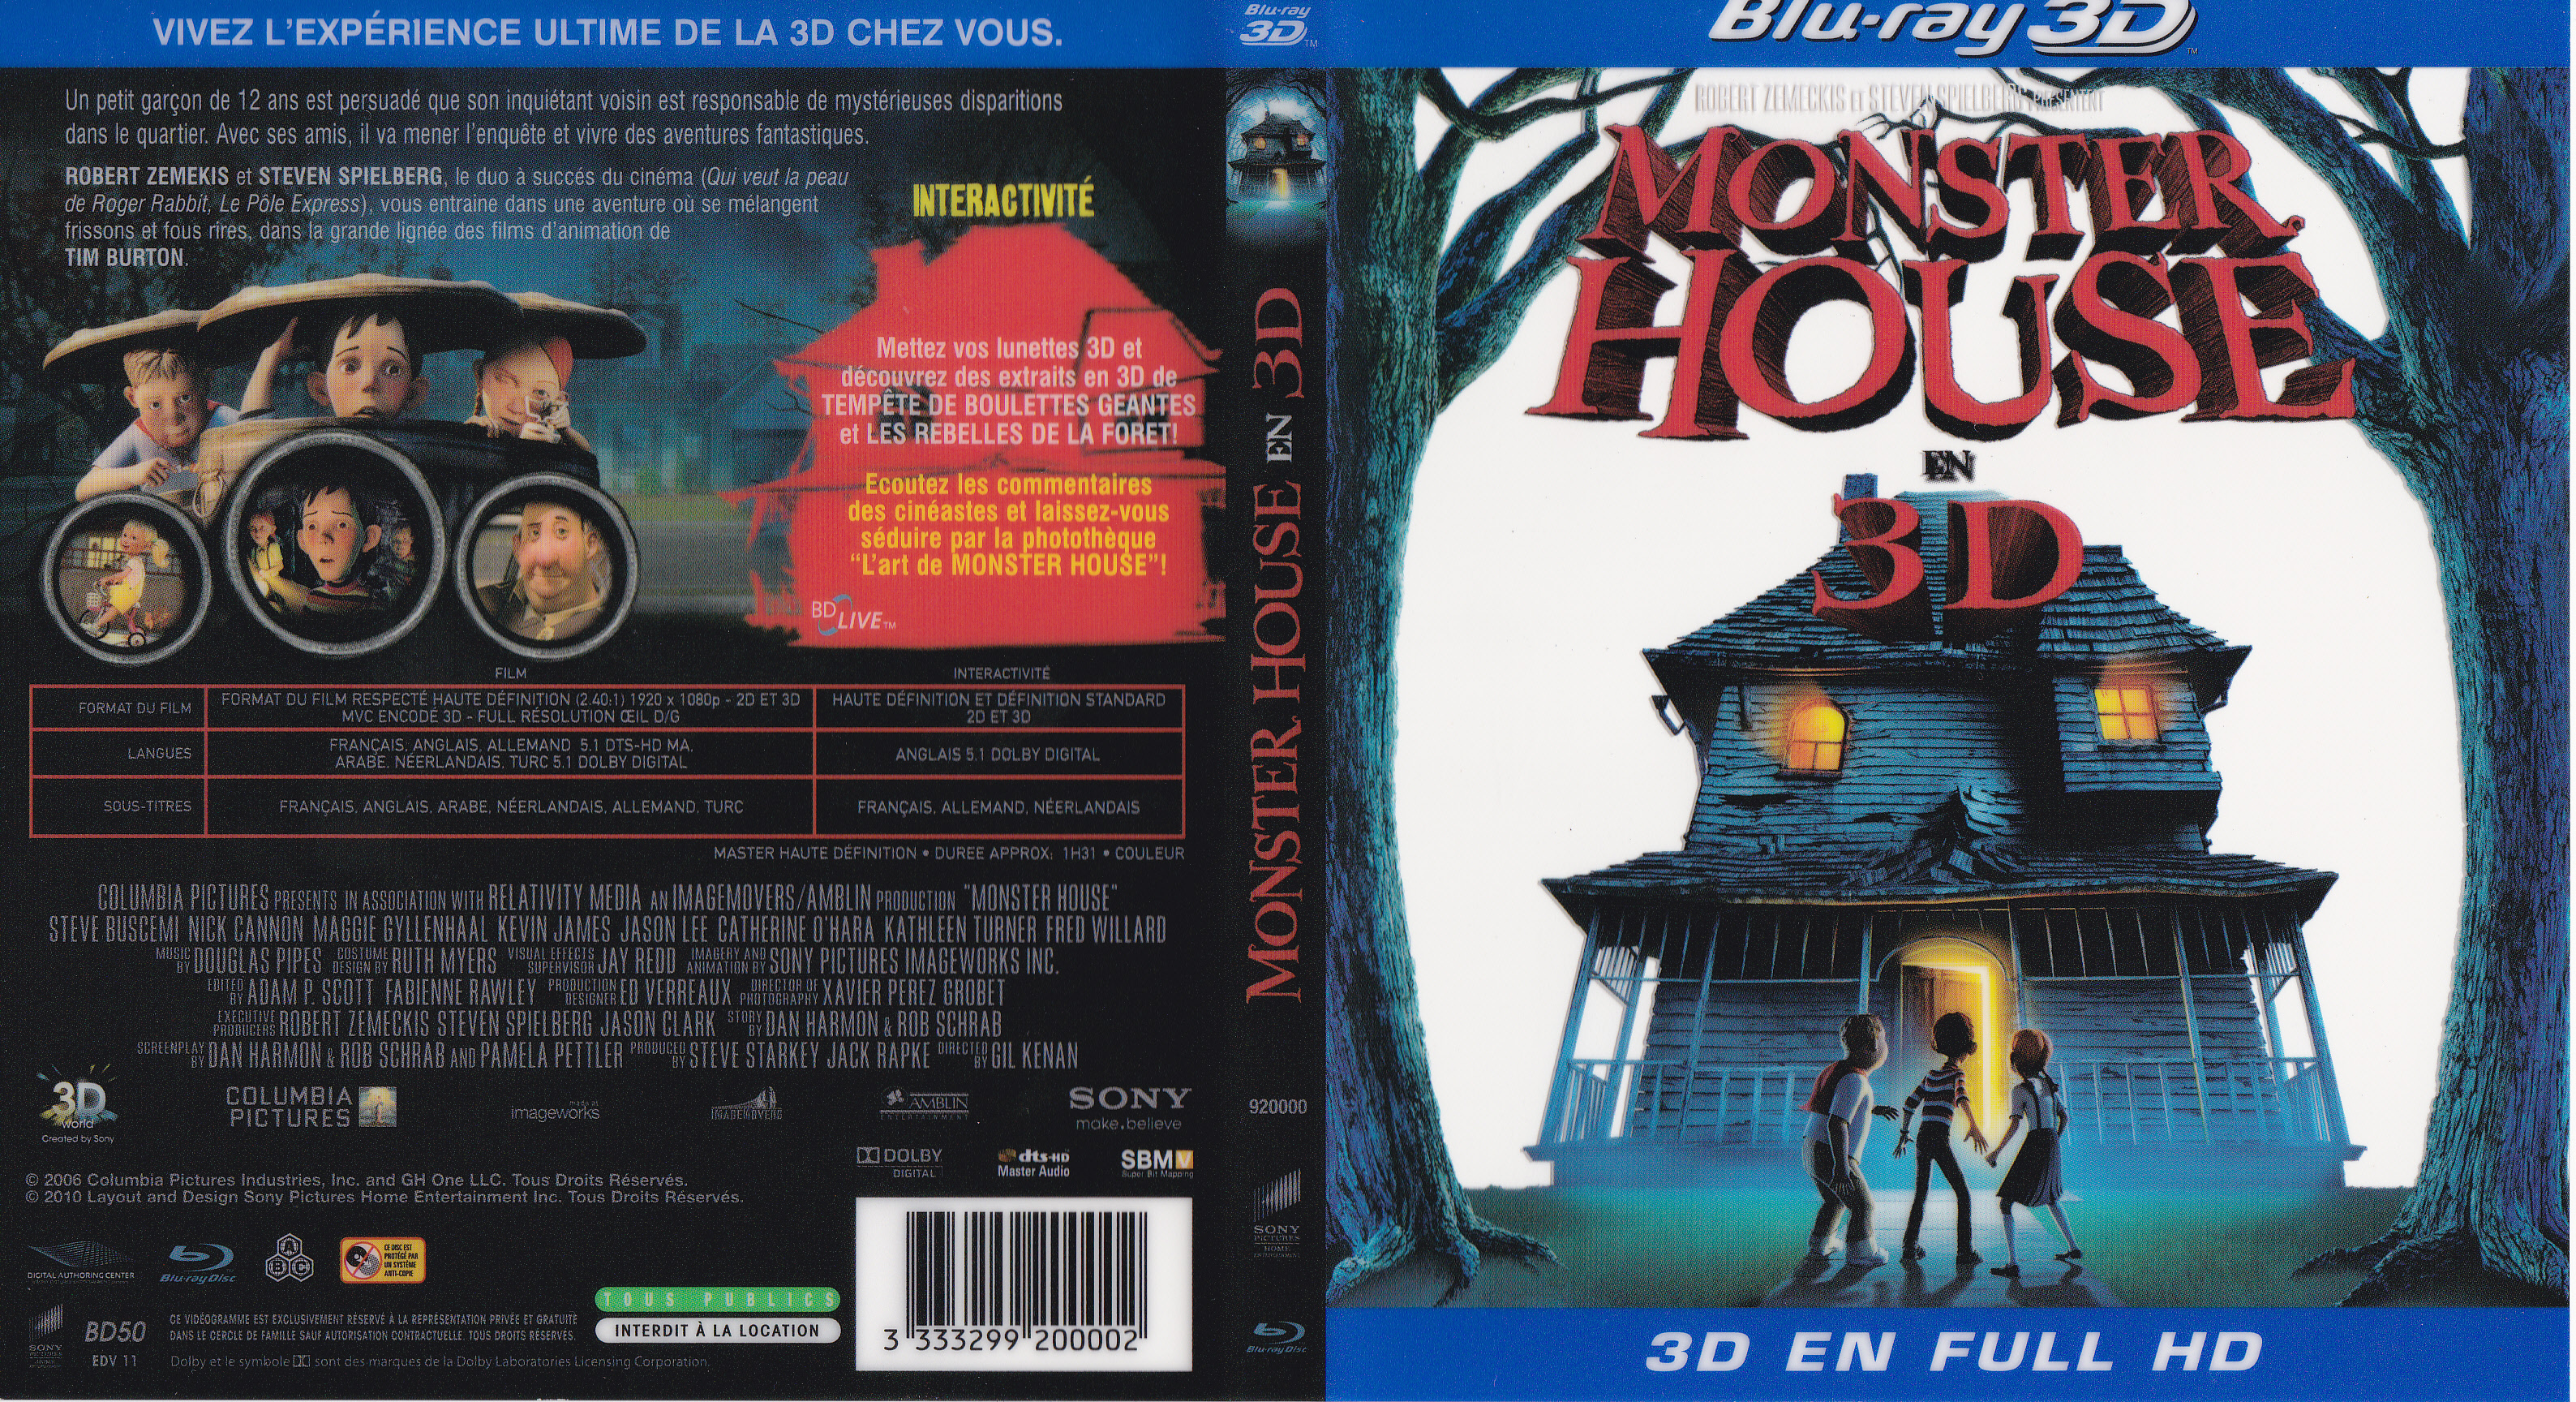 Jaquette DVD Monster house (BLU-RAY) v2